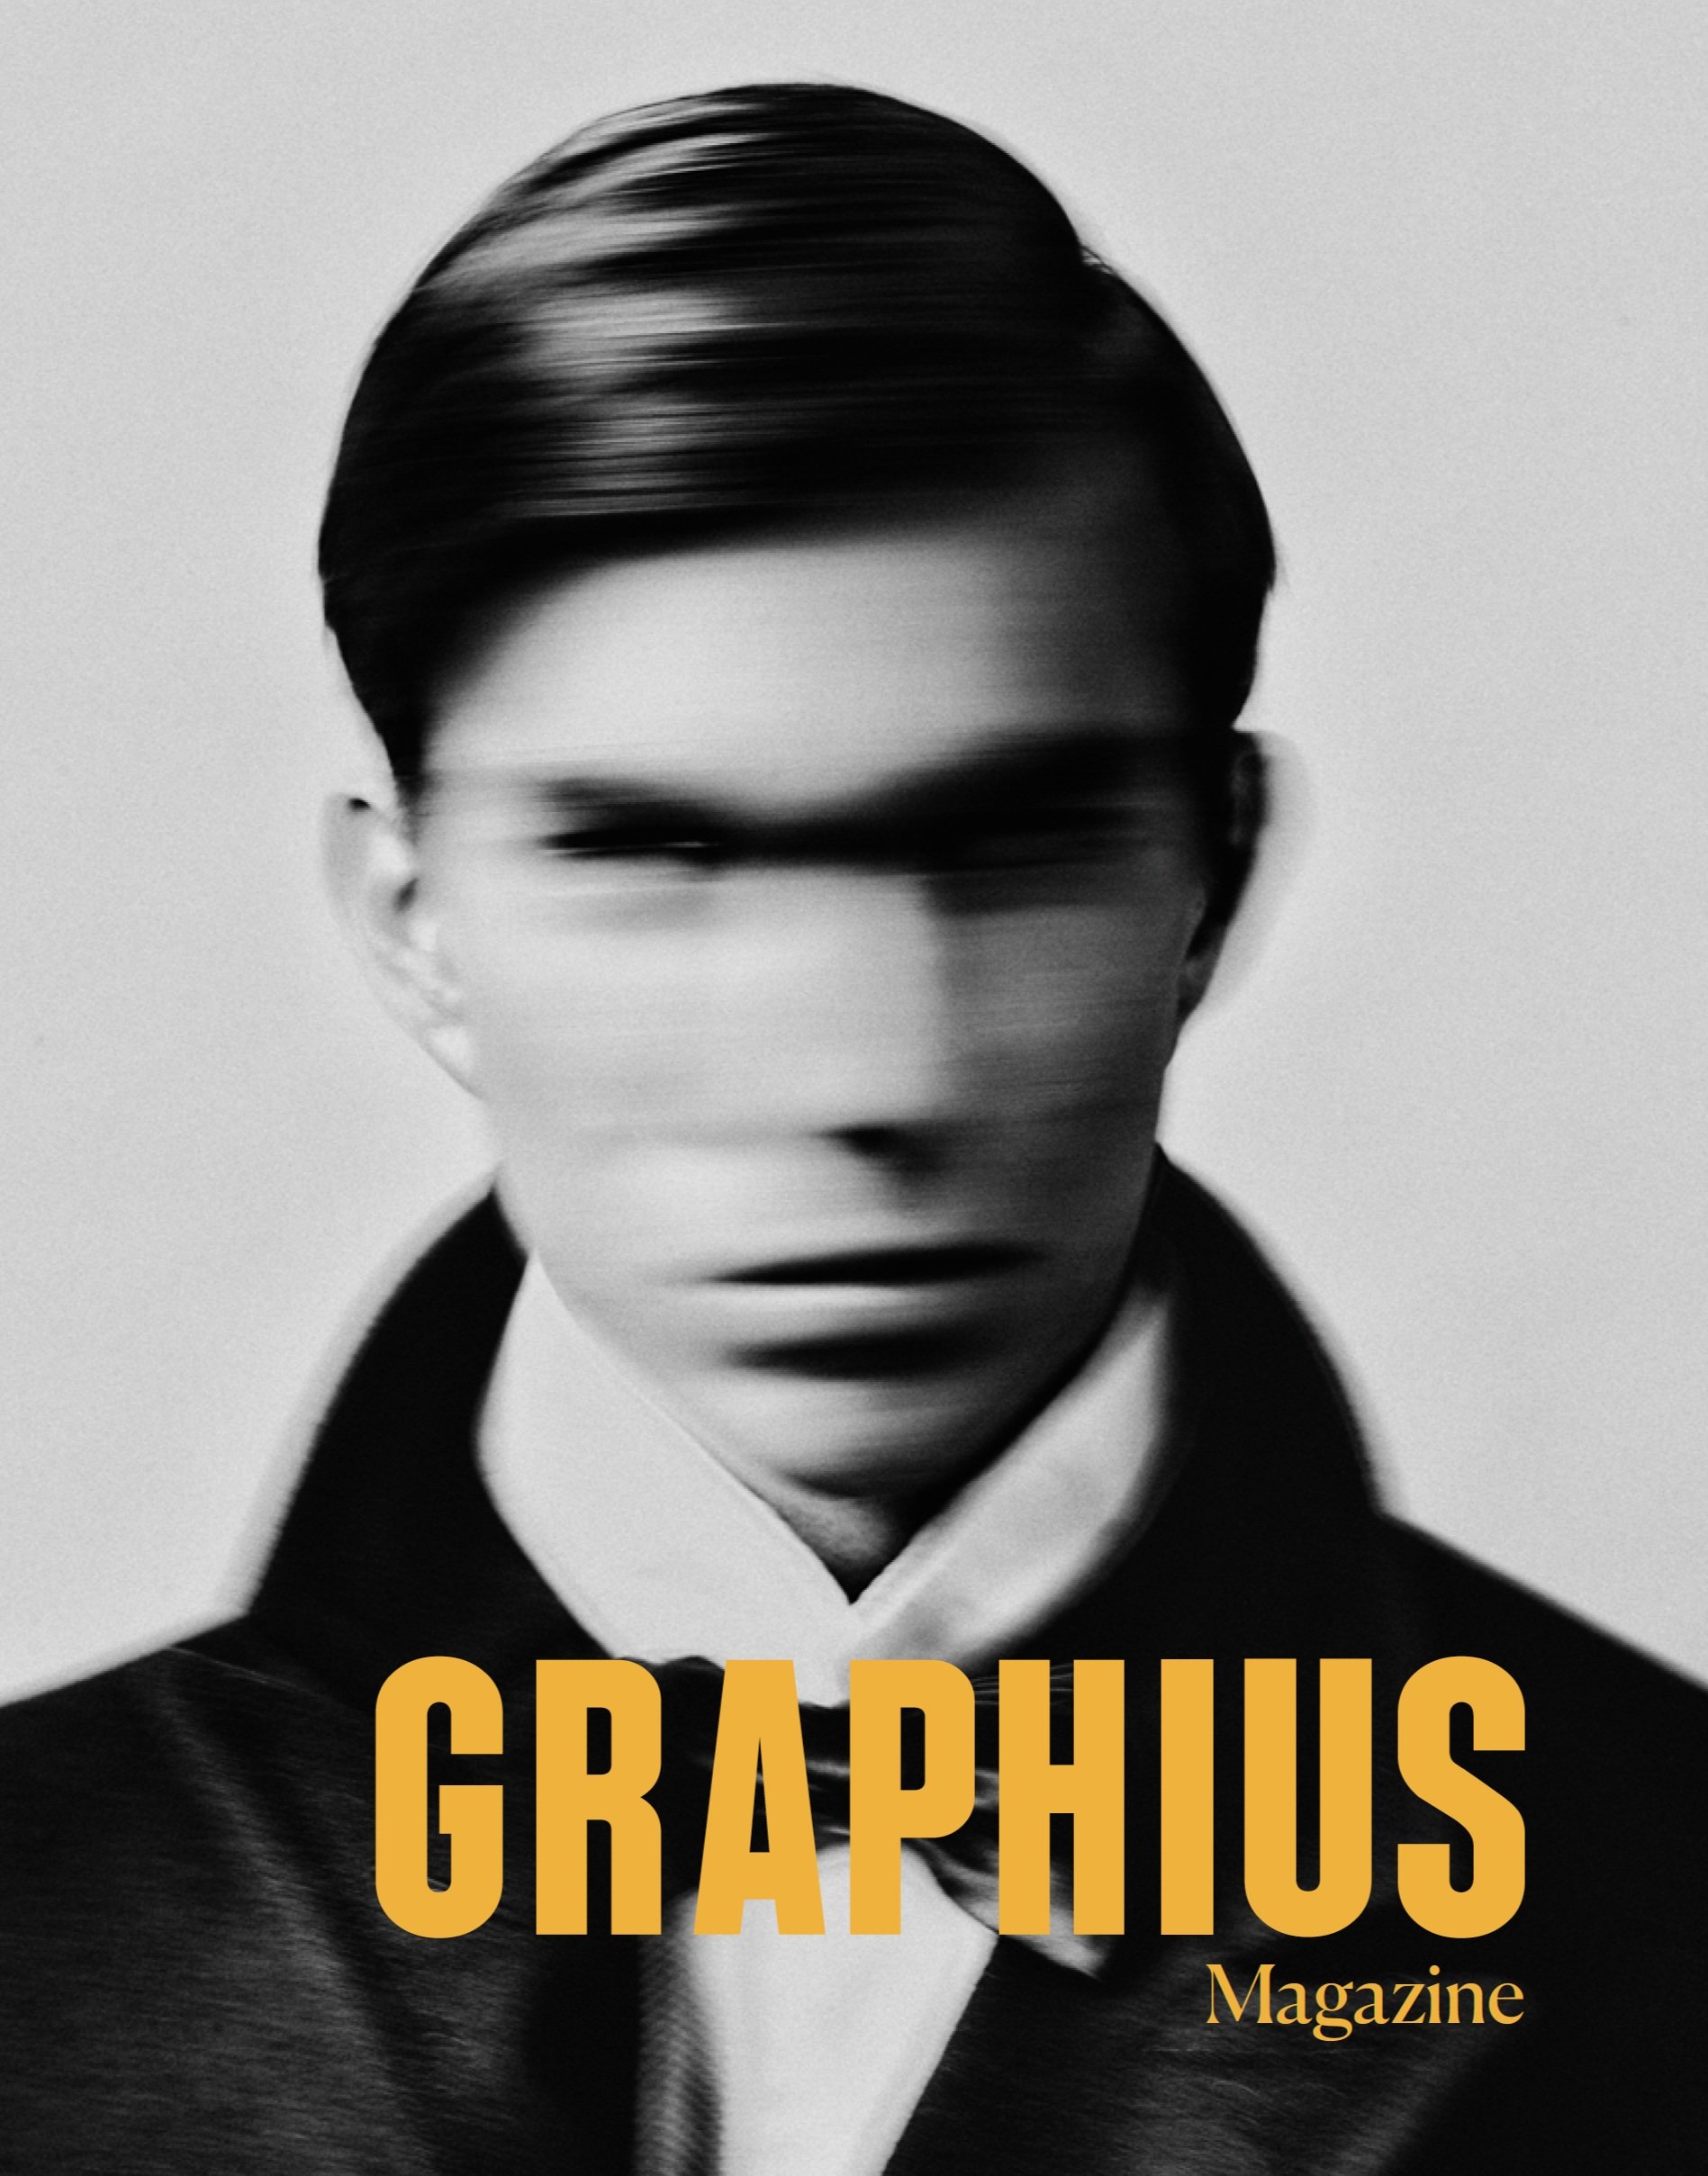 1Graphius+Magazine+x+Bastiaan+Woudt+Rhythm.jpg